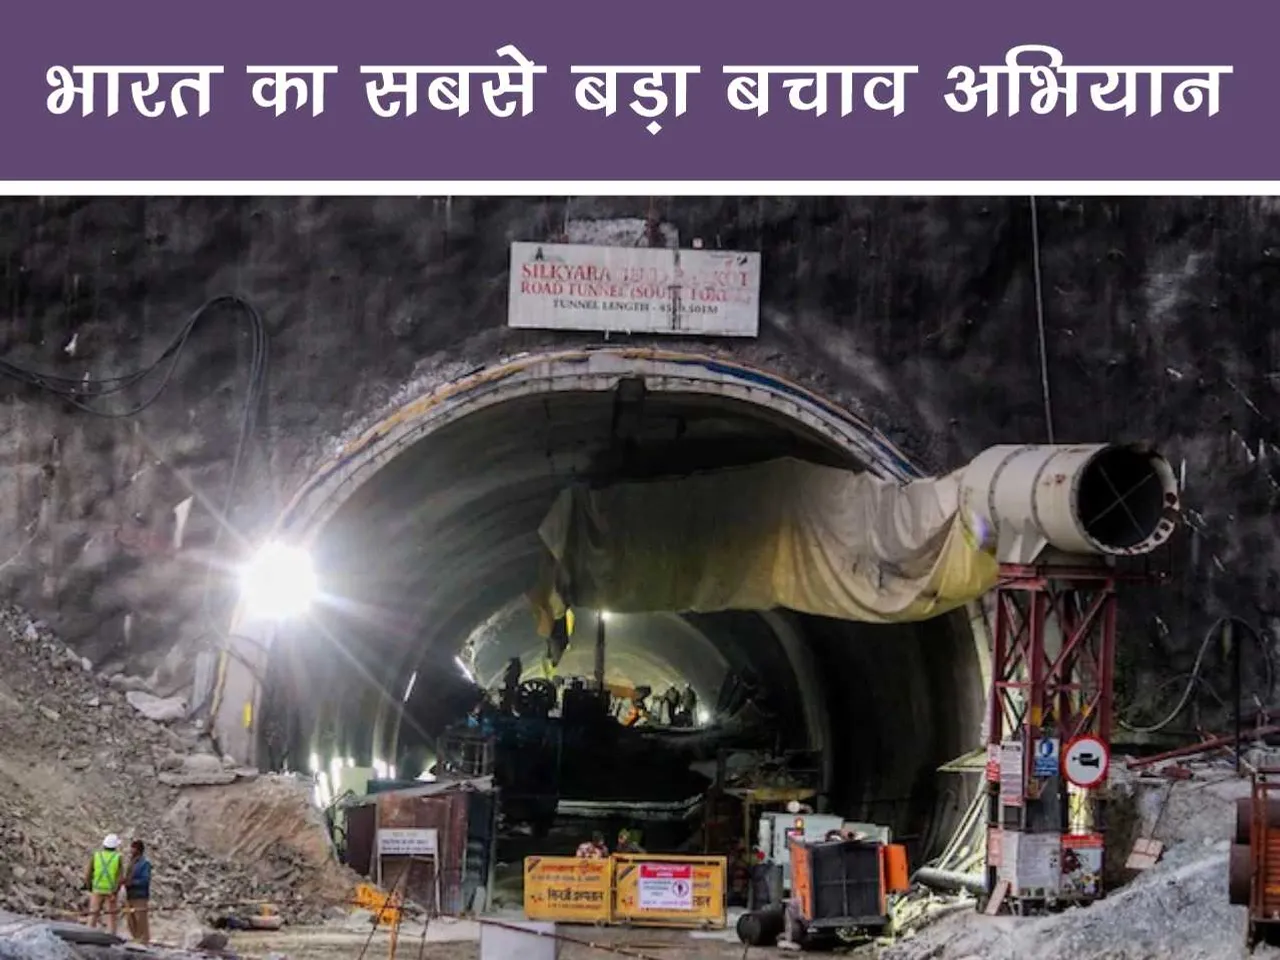 Silkyara tunnel Rescue operation